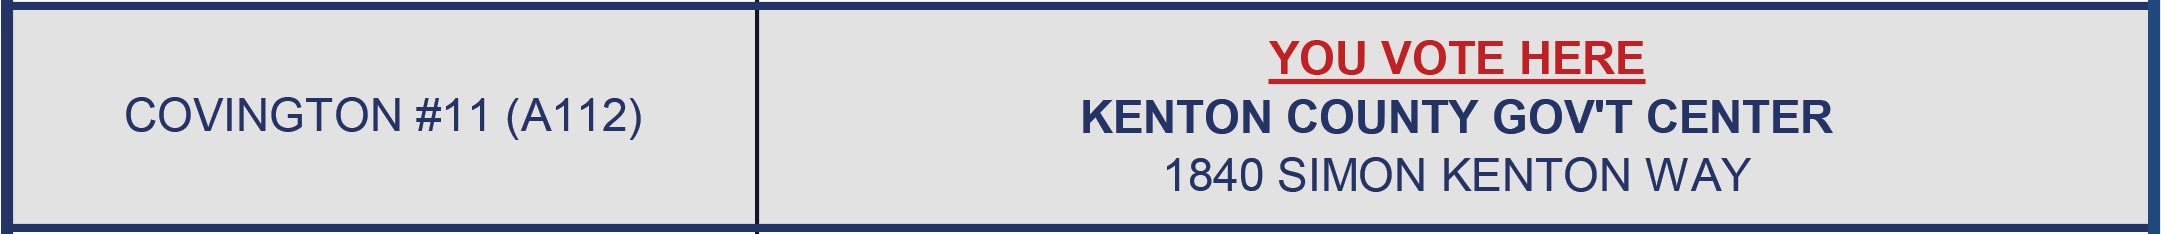 Kenton County Gov't Center